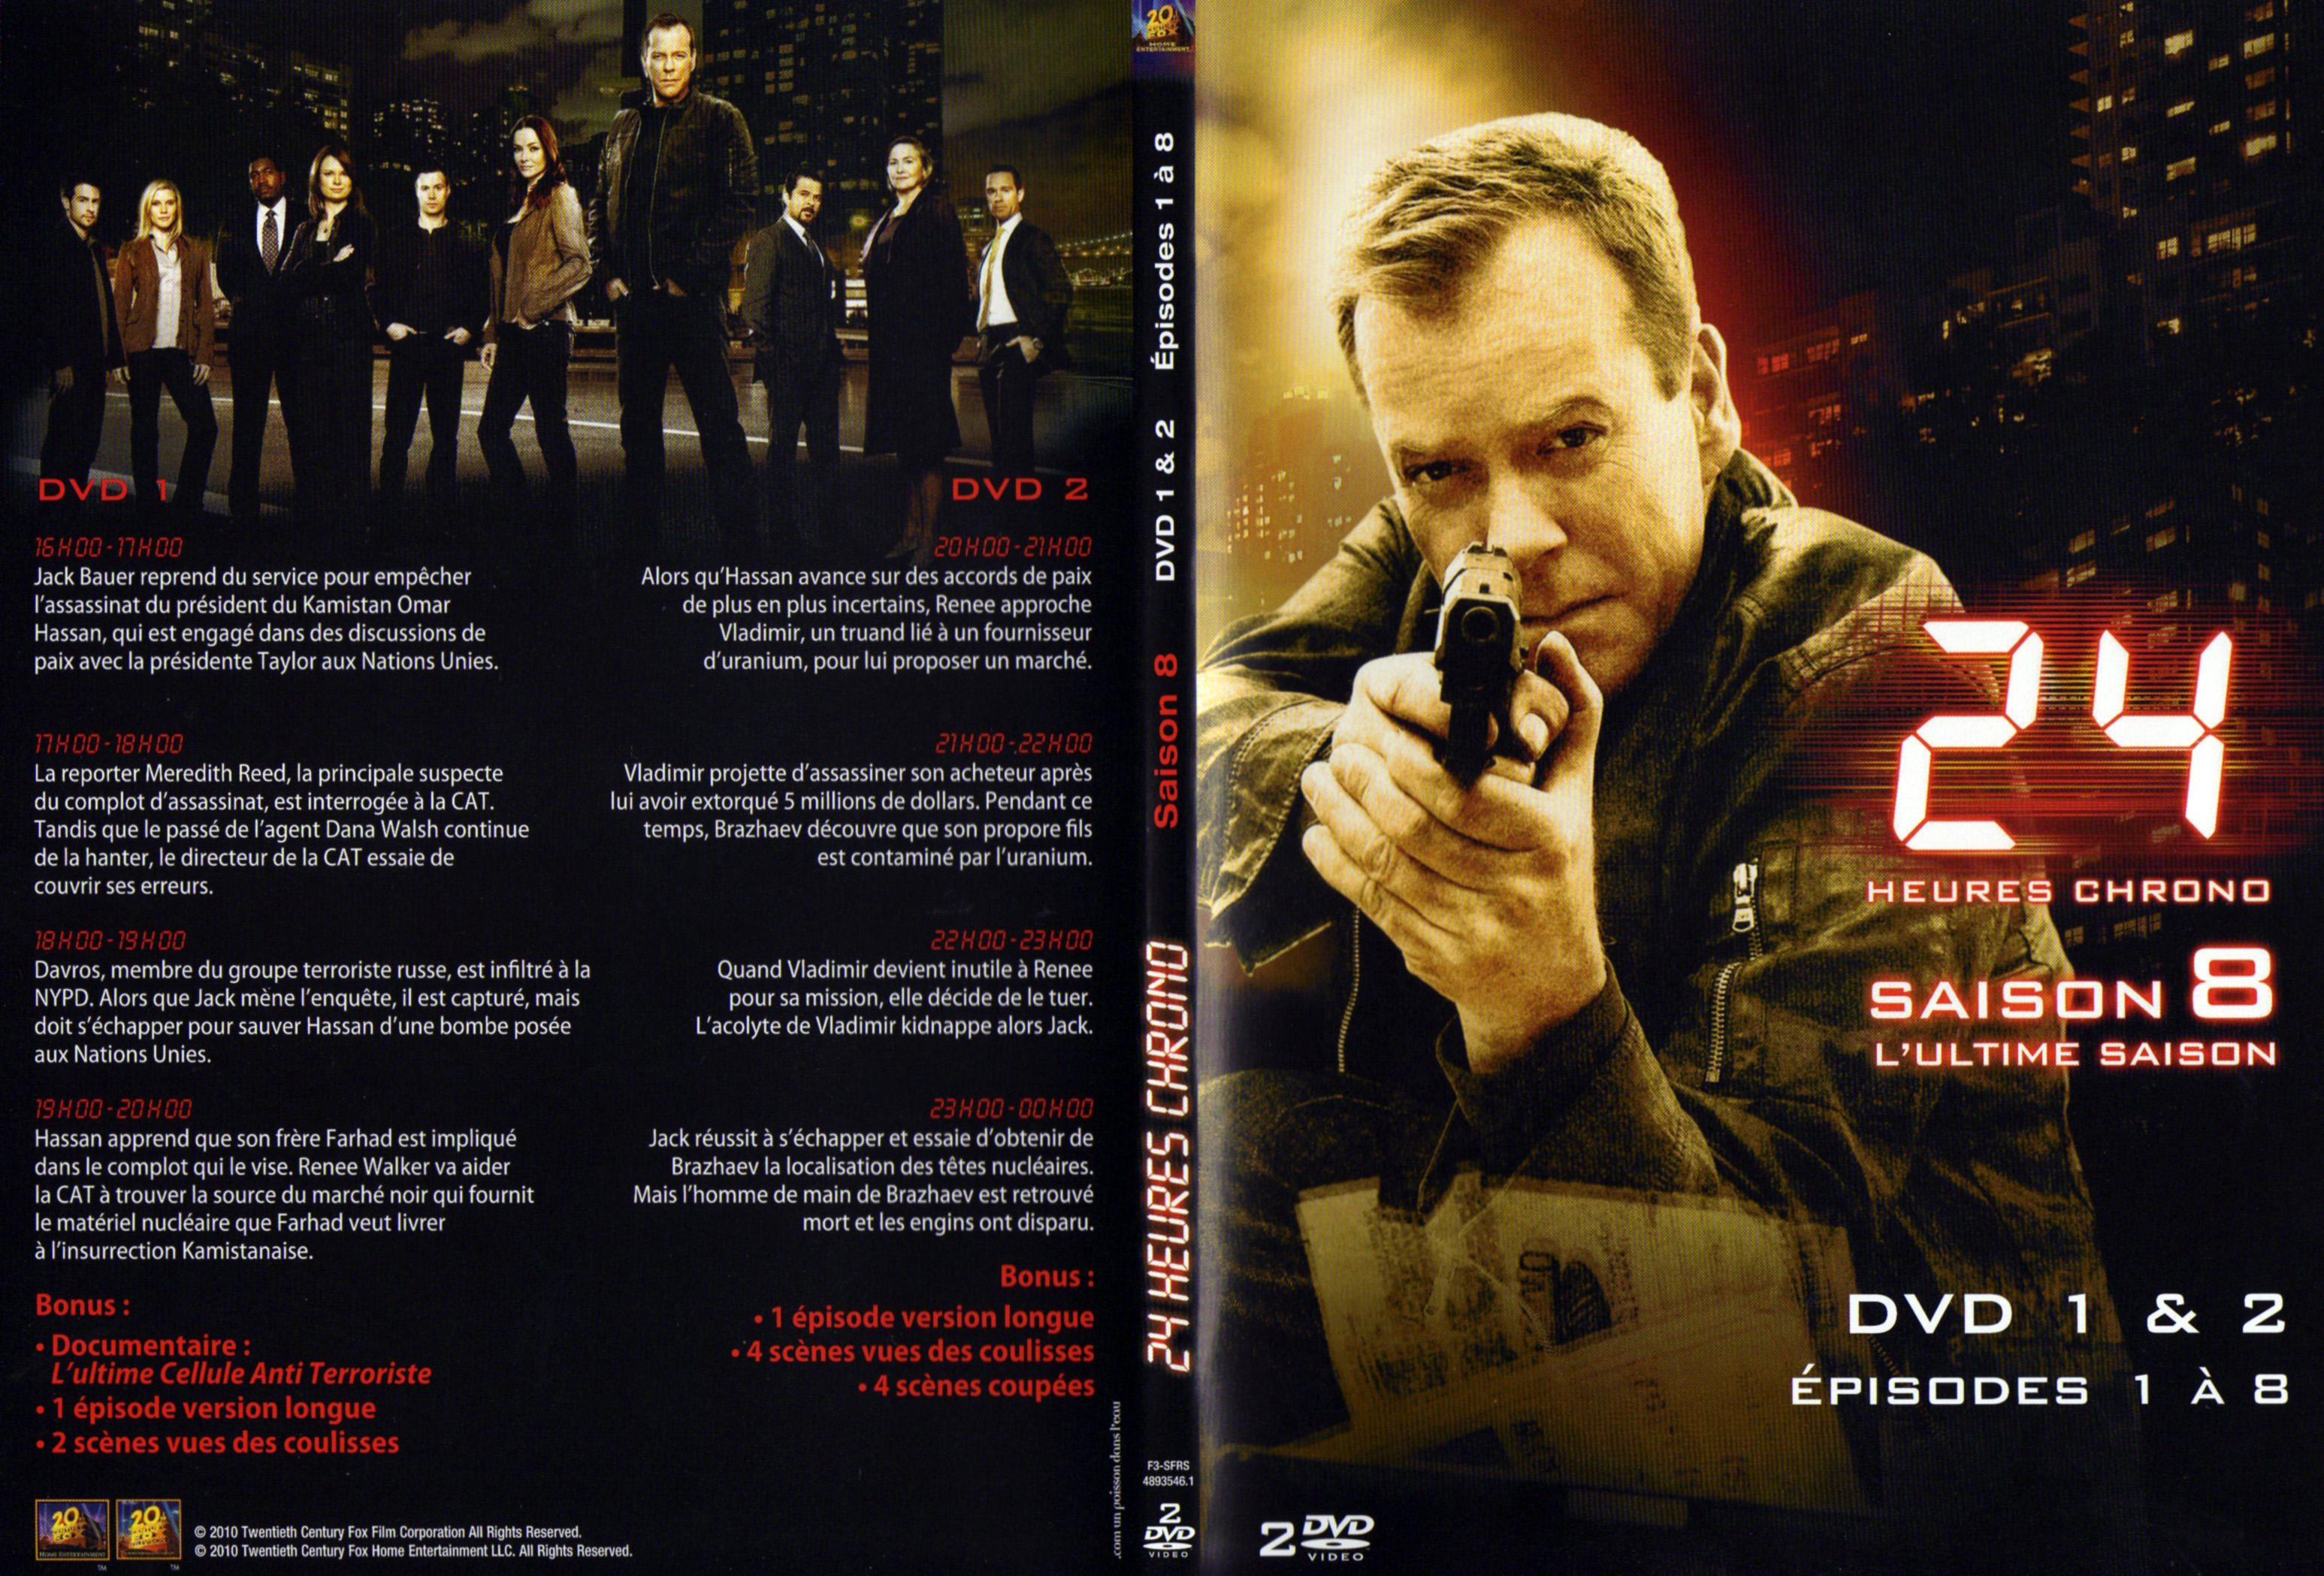 Jaquette DVD 24 heures chrono Saison 8 DVD 1